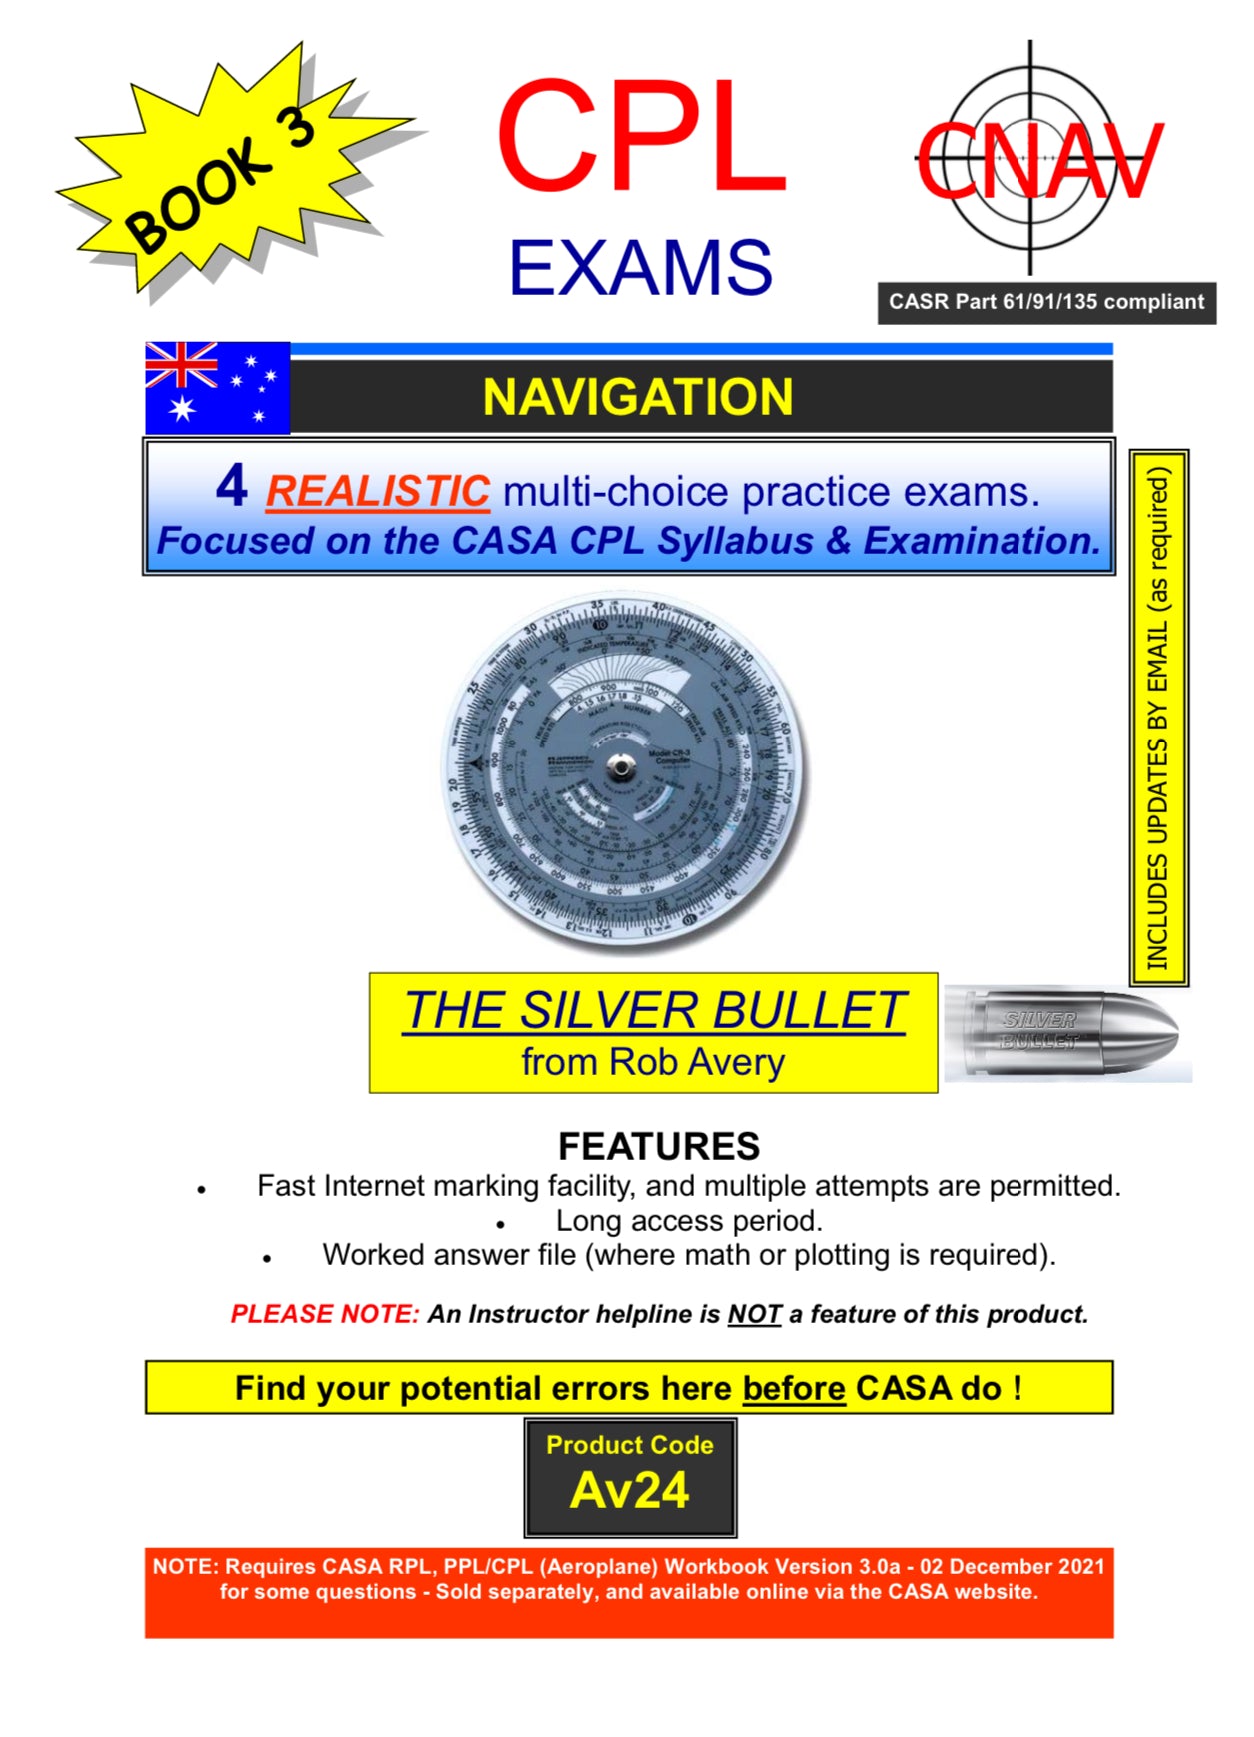 Avfacts by Rob Avery CPL Navigation Practice Exams - AV24